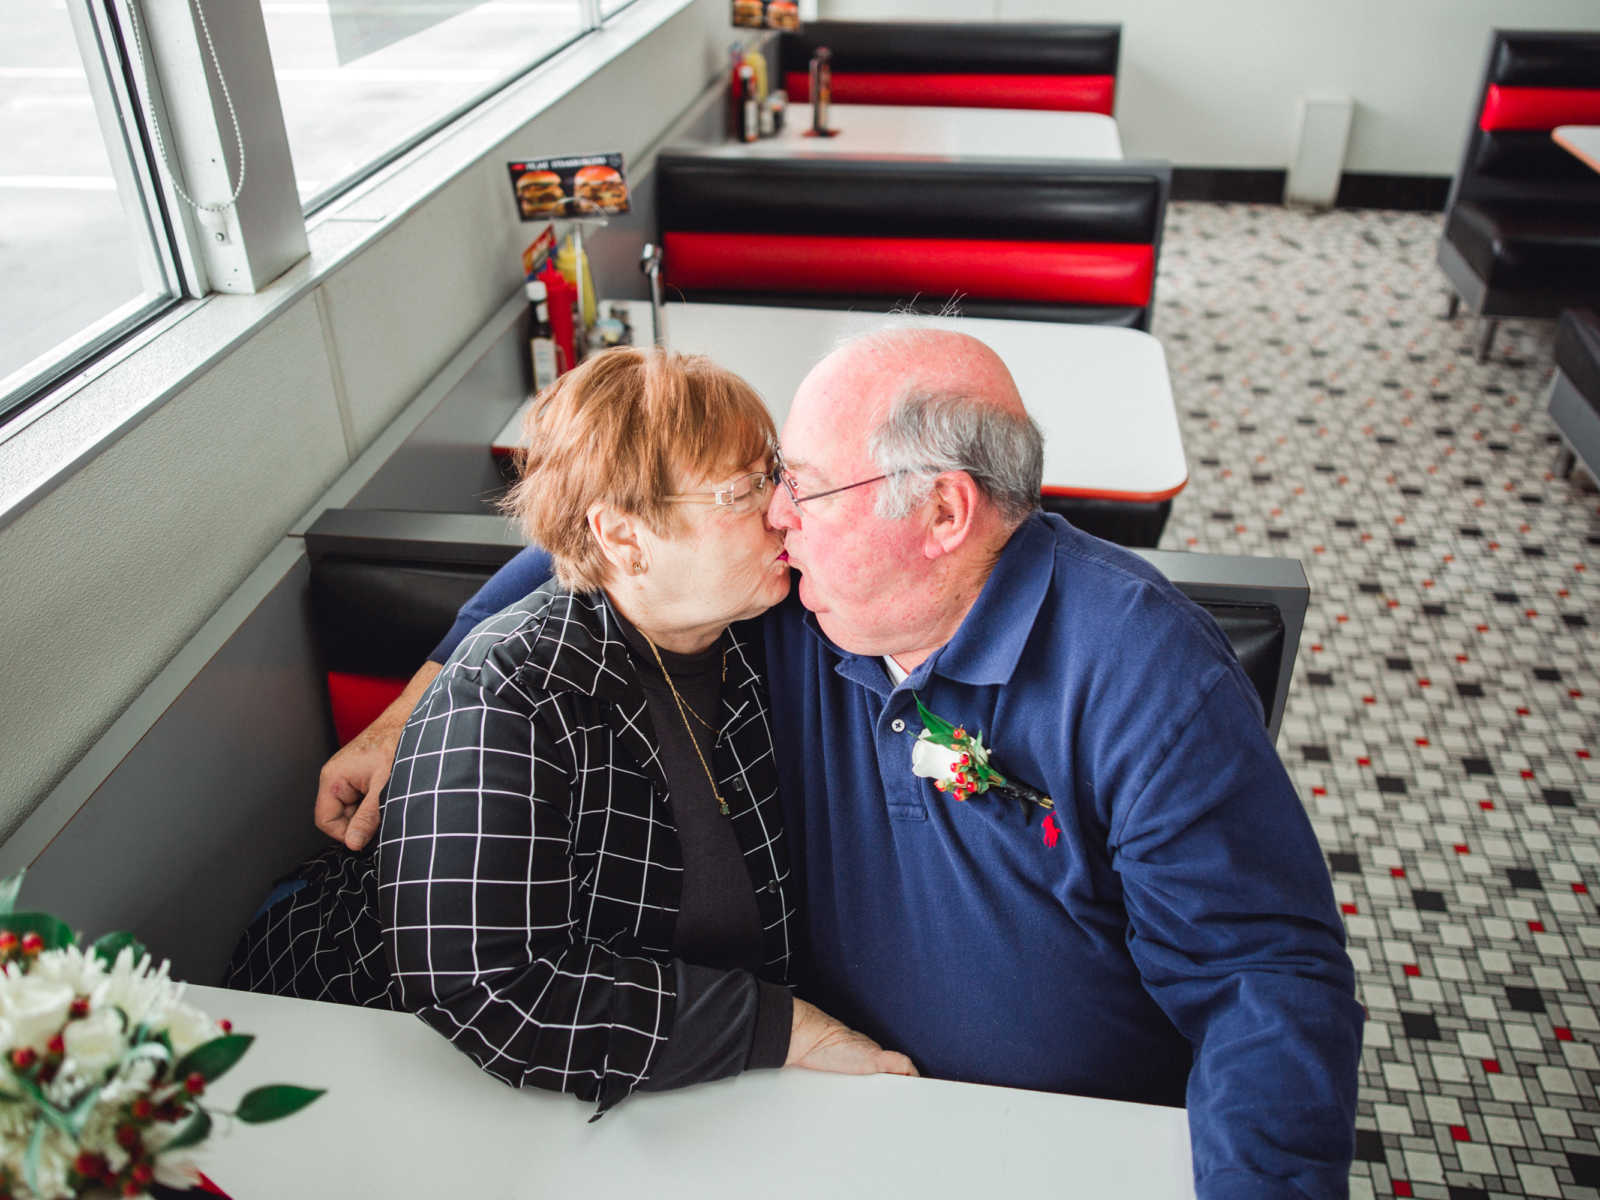 Husband and wife who met at Steak 'n Shake in 1962 kiss in Steak 'n Shake booth